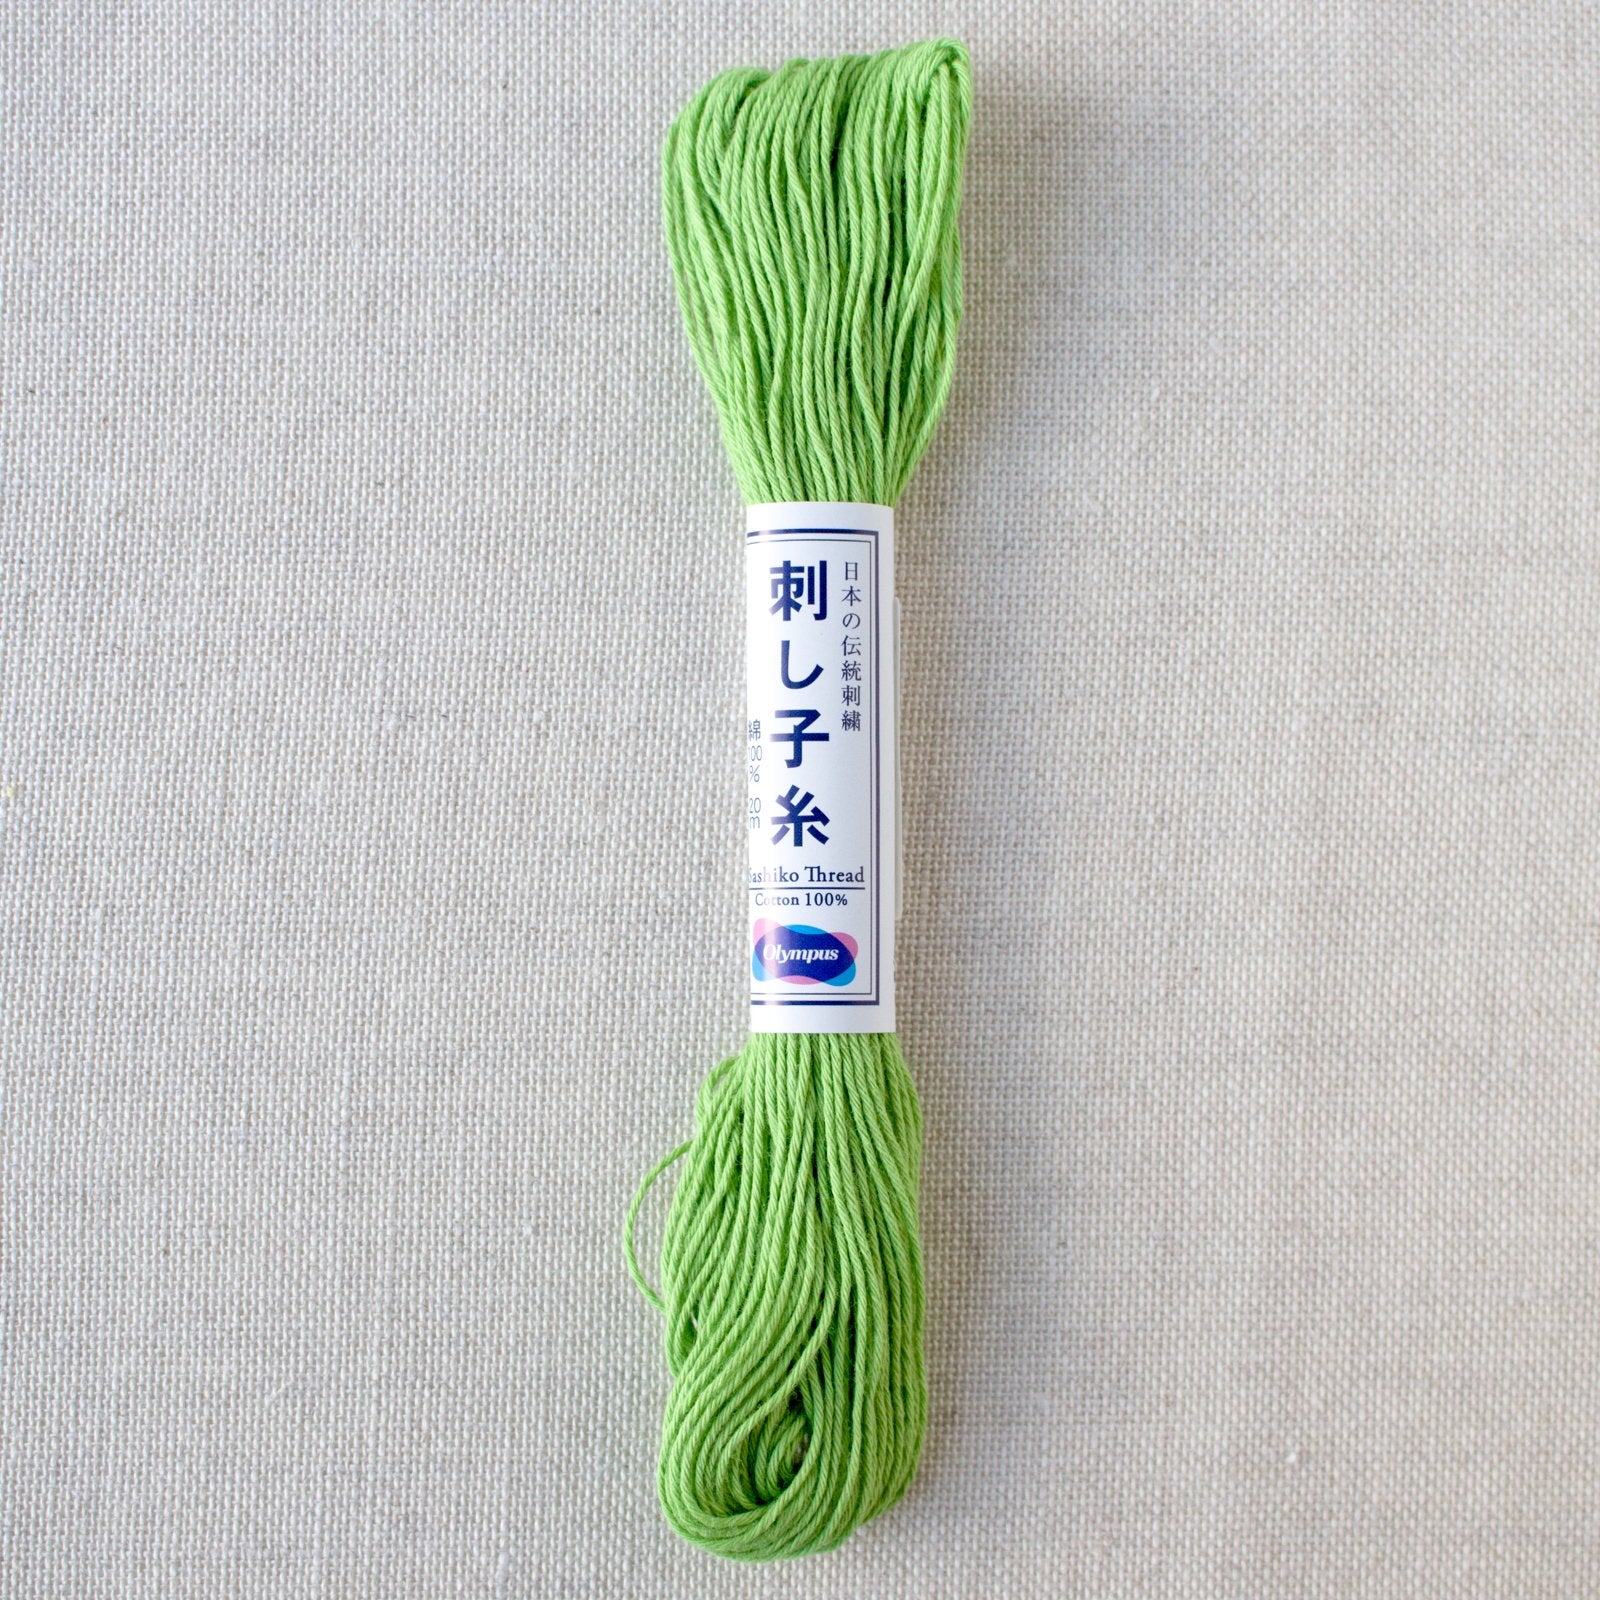 20m Skein Olympus Sashiko Thread - Variegated Green (#51)